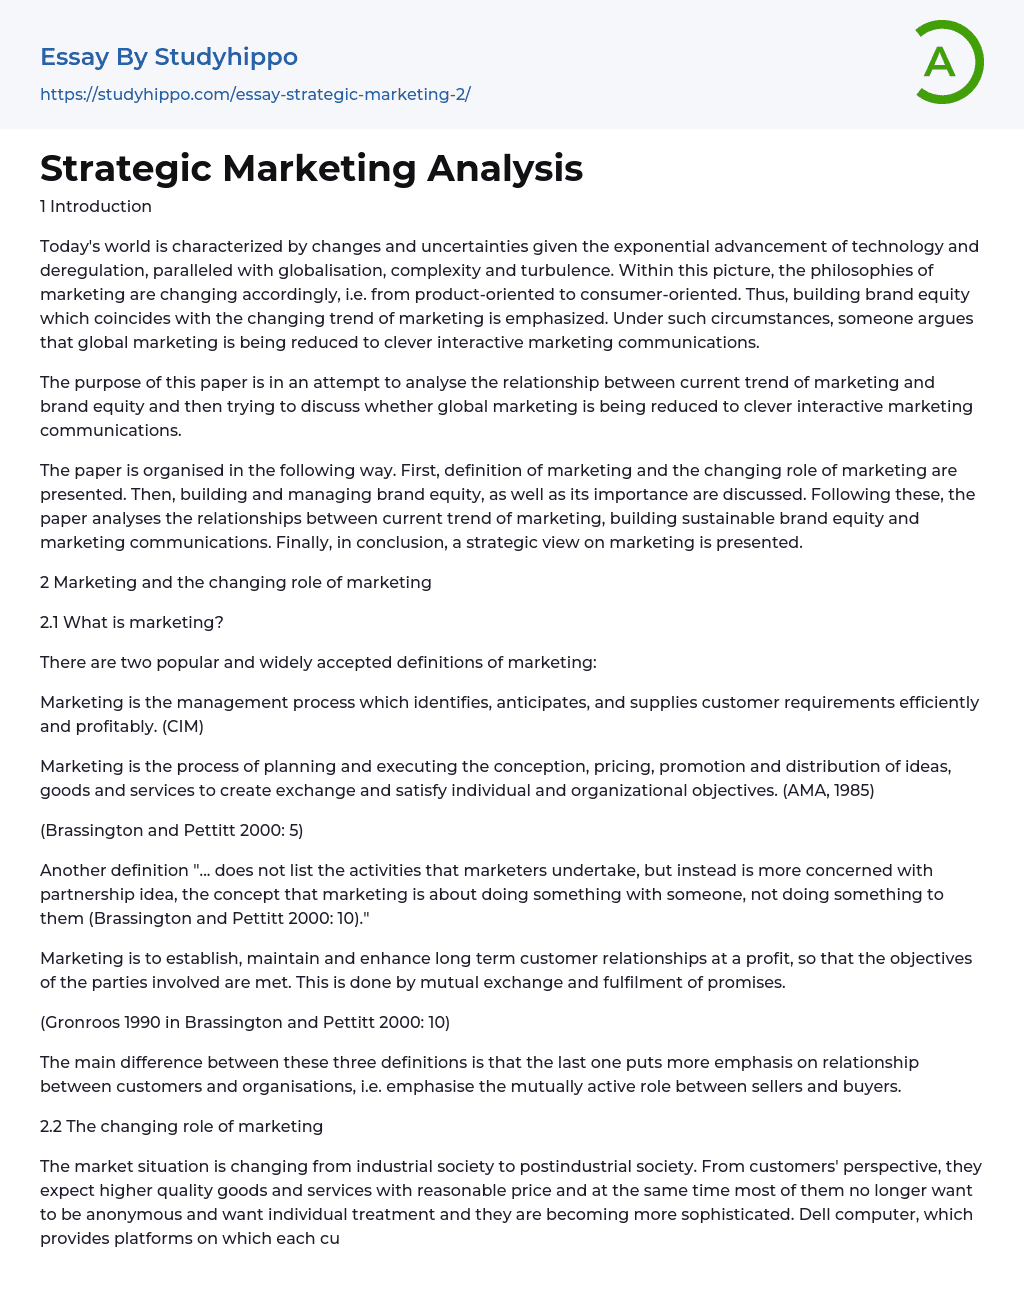 Strategic Marketing Analysis Essay Example